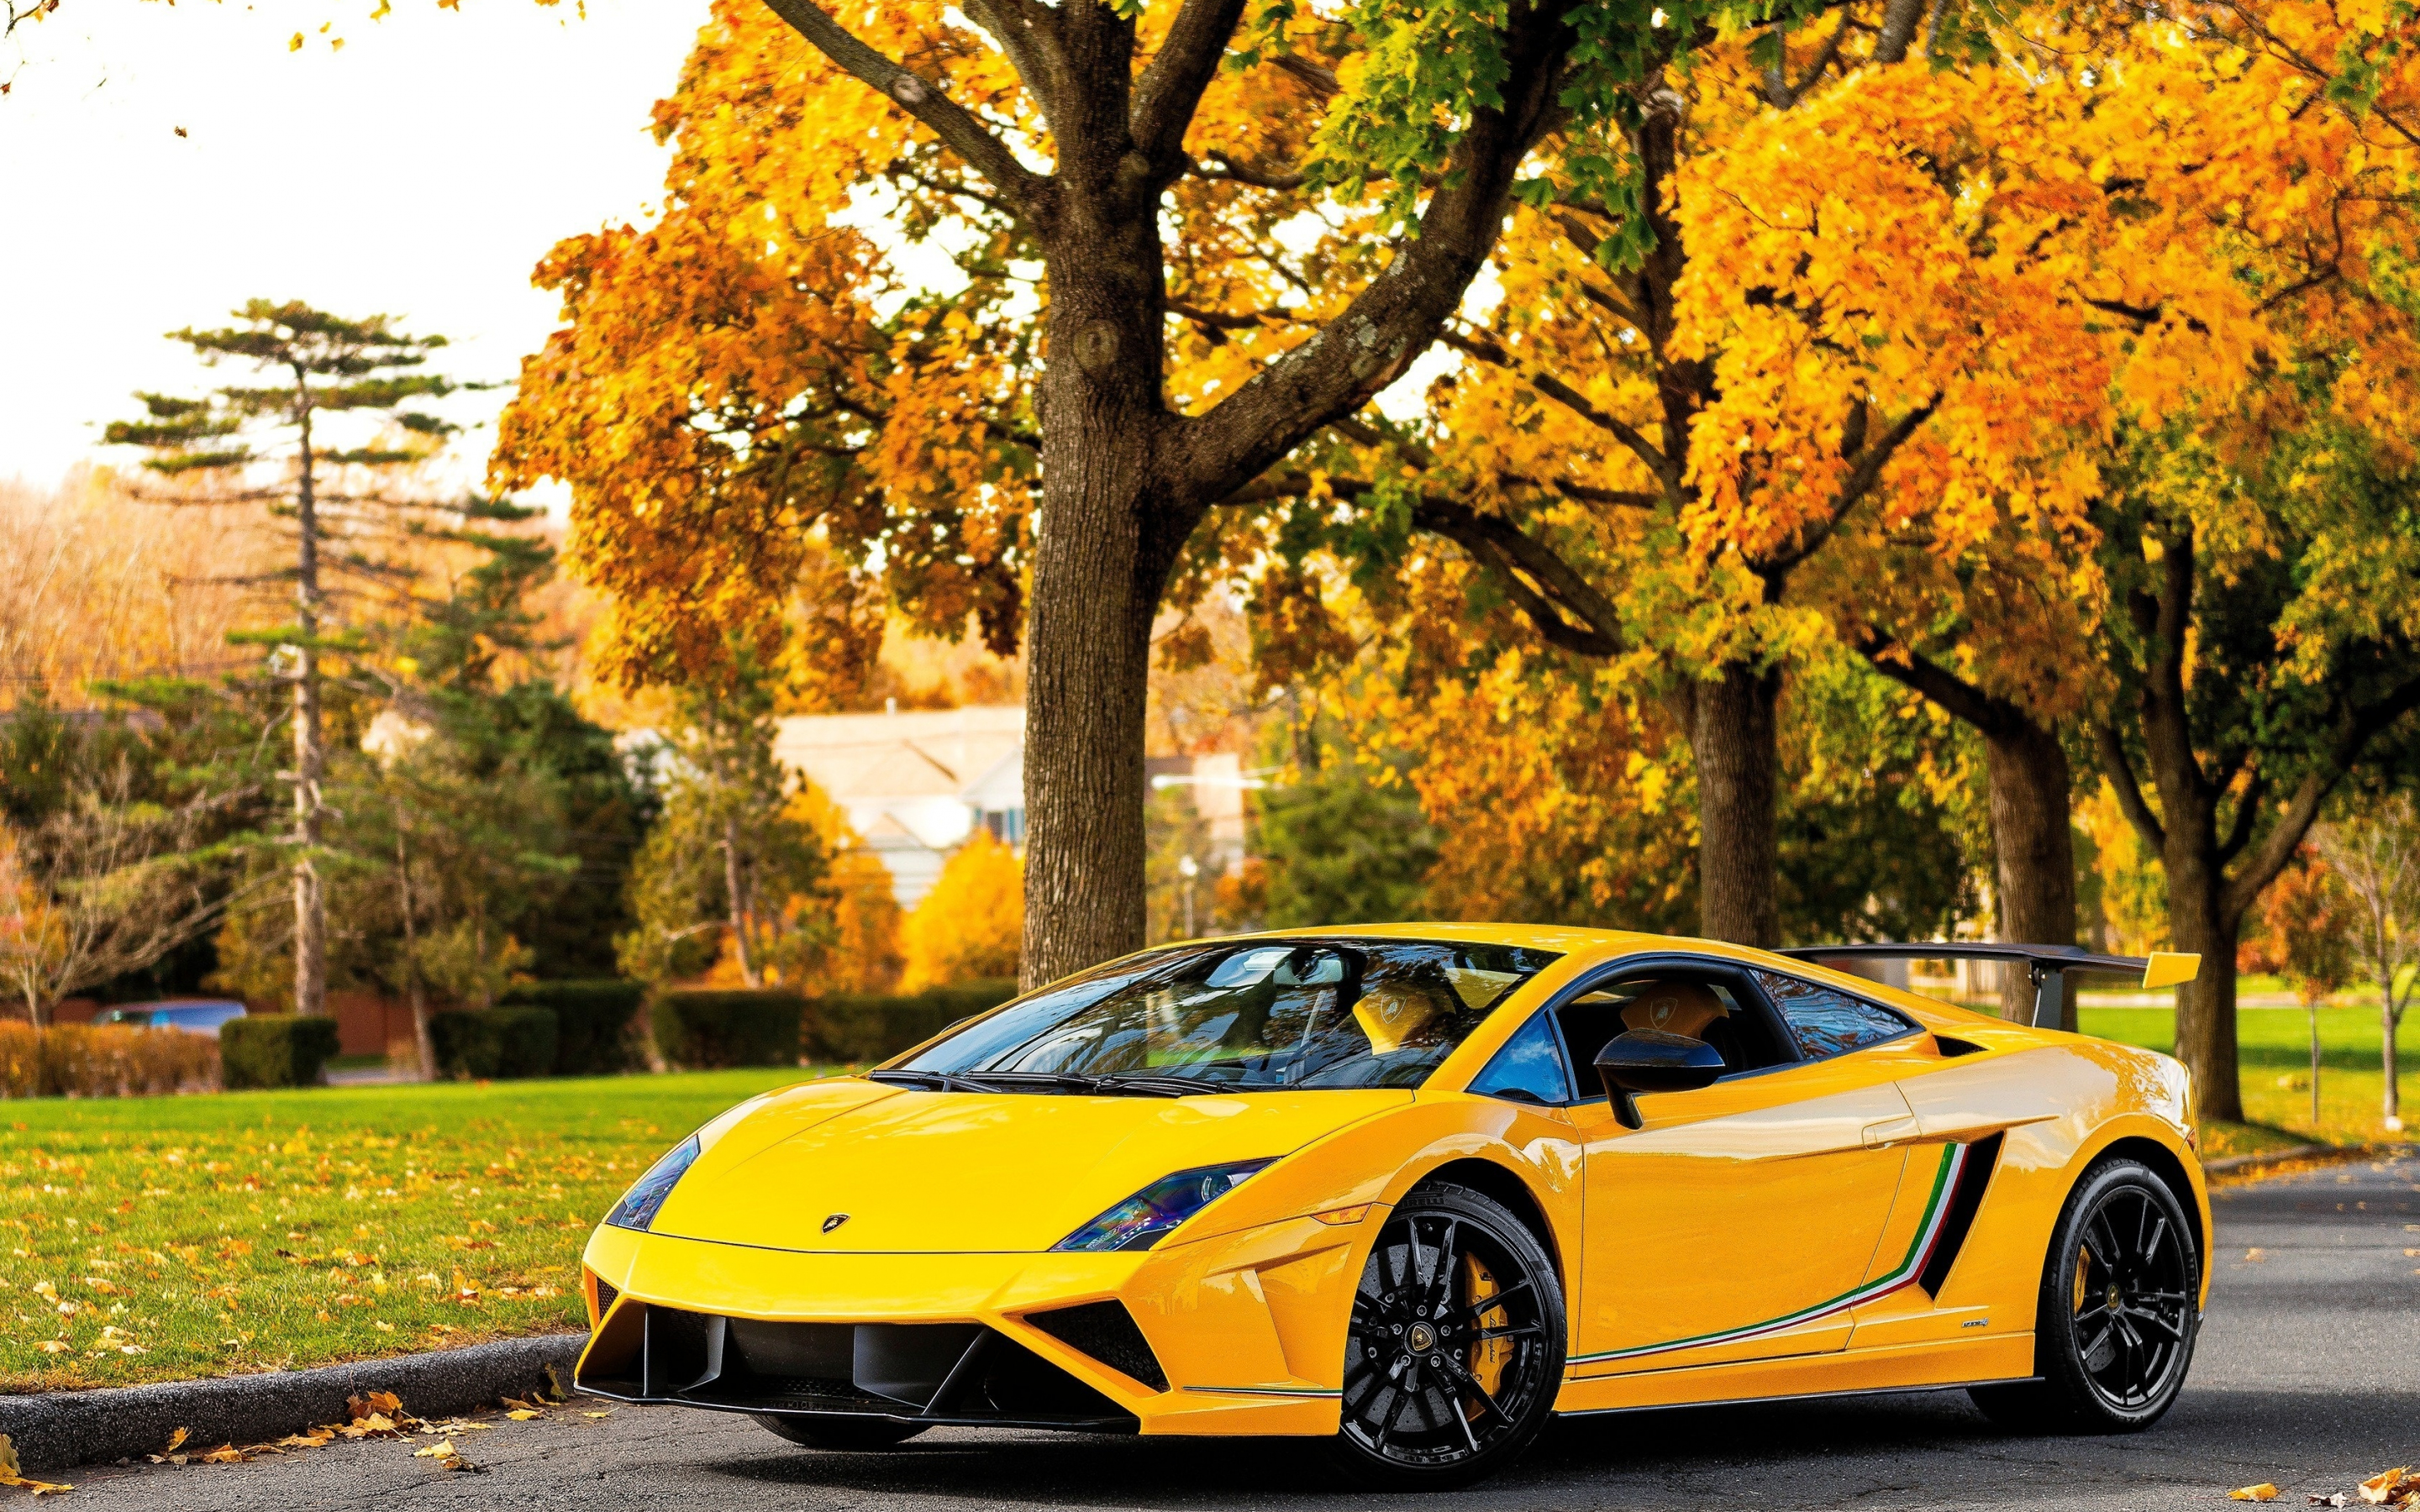 Lamborghini Gallardo, yellow sports car, 2880x1800 wallpaper